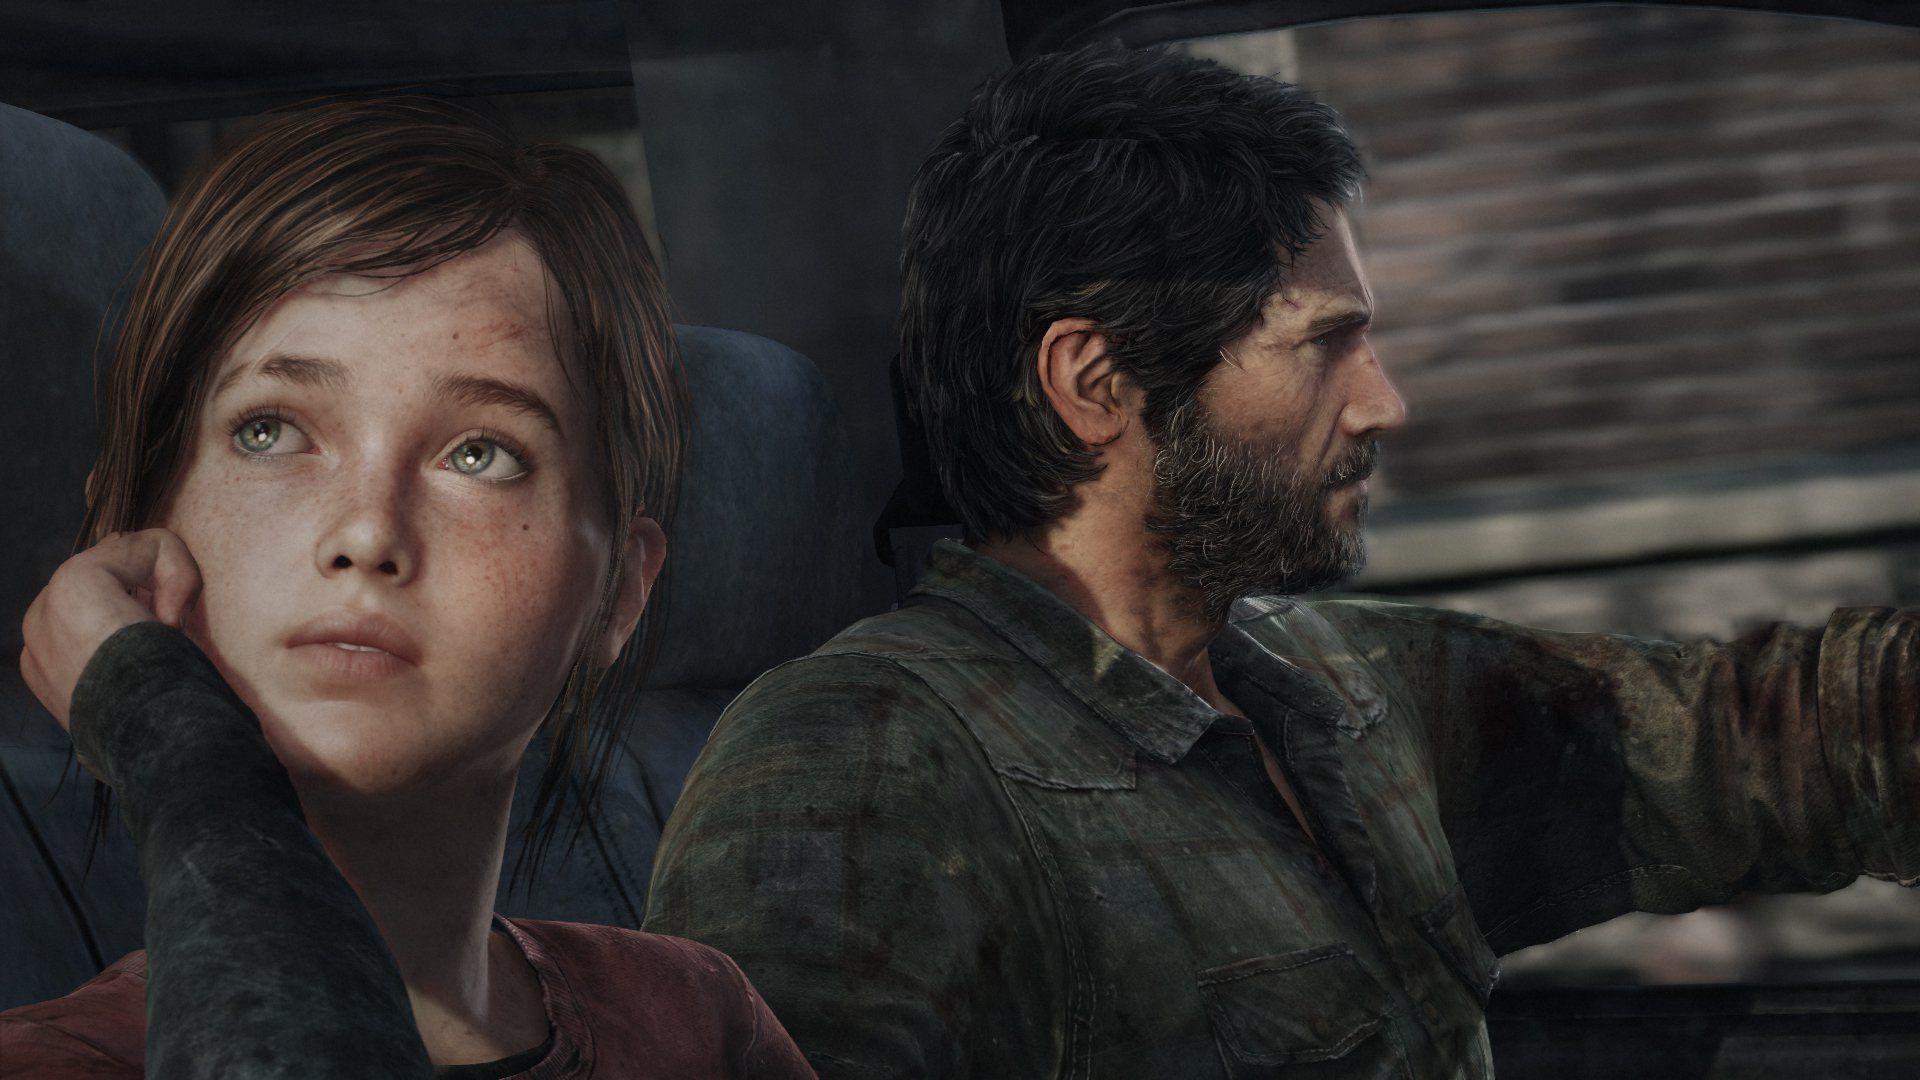 The Last Of Us Wallpaper HD Download. Wallpaper